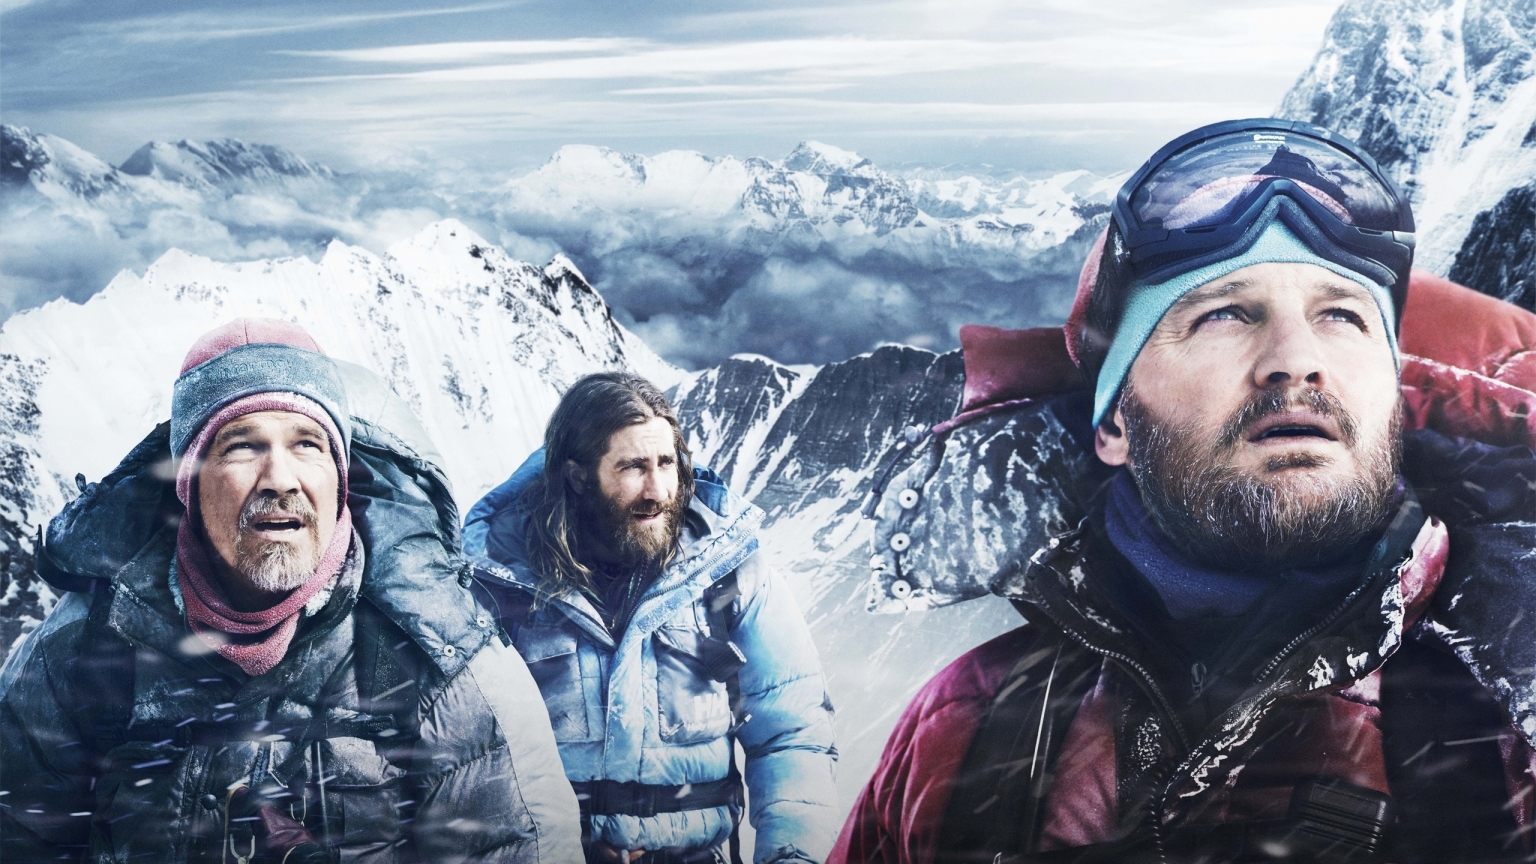 Everest Movie Poster for 1536 x 864 HDTV resolution